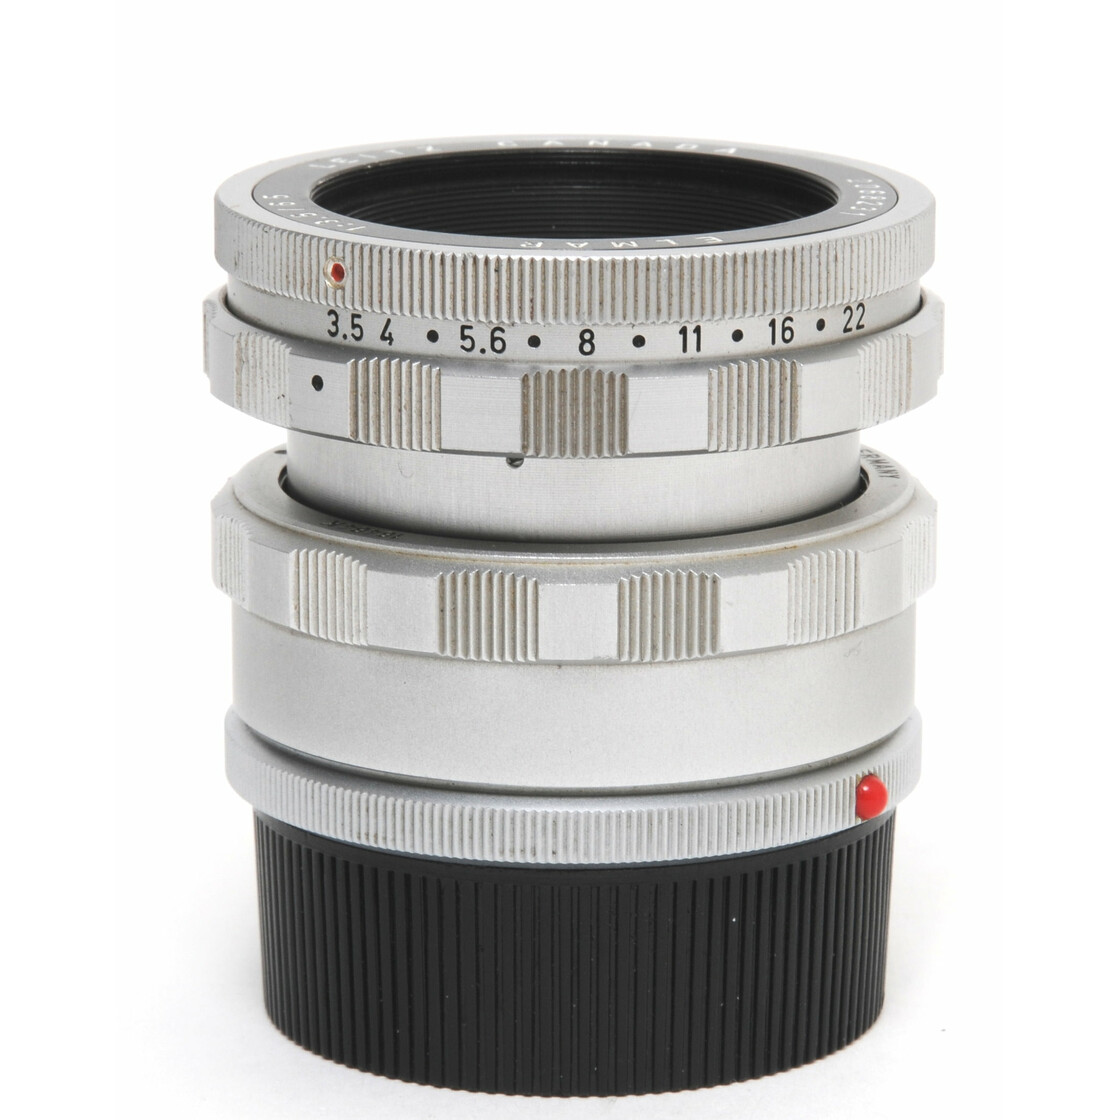 Leica Visoflex Elmar 3,5/65mm with OTZFO 16464 K Mount clean glass